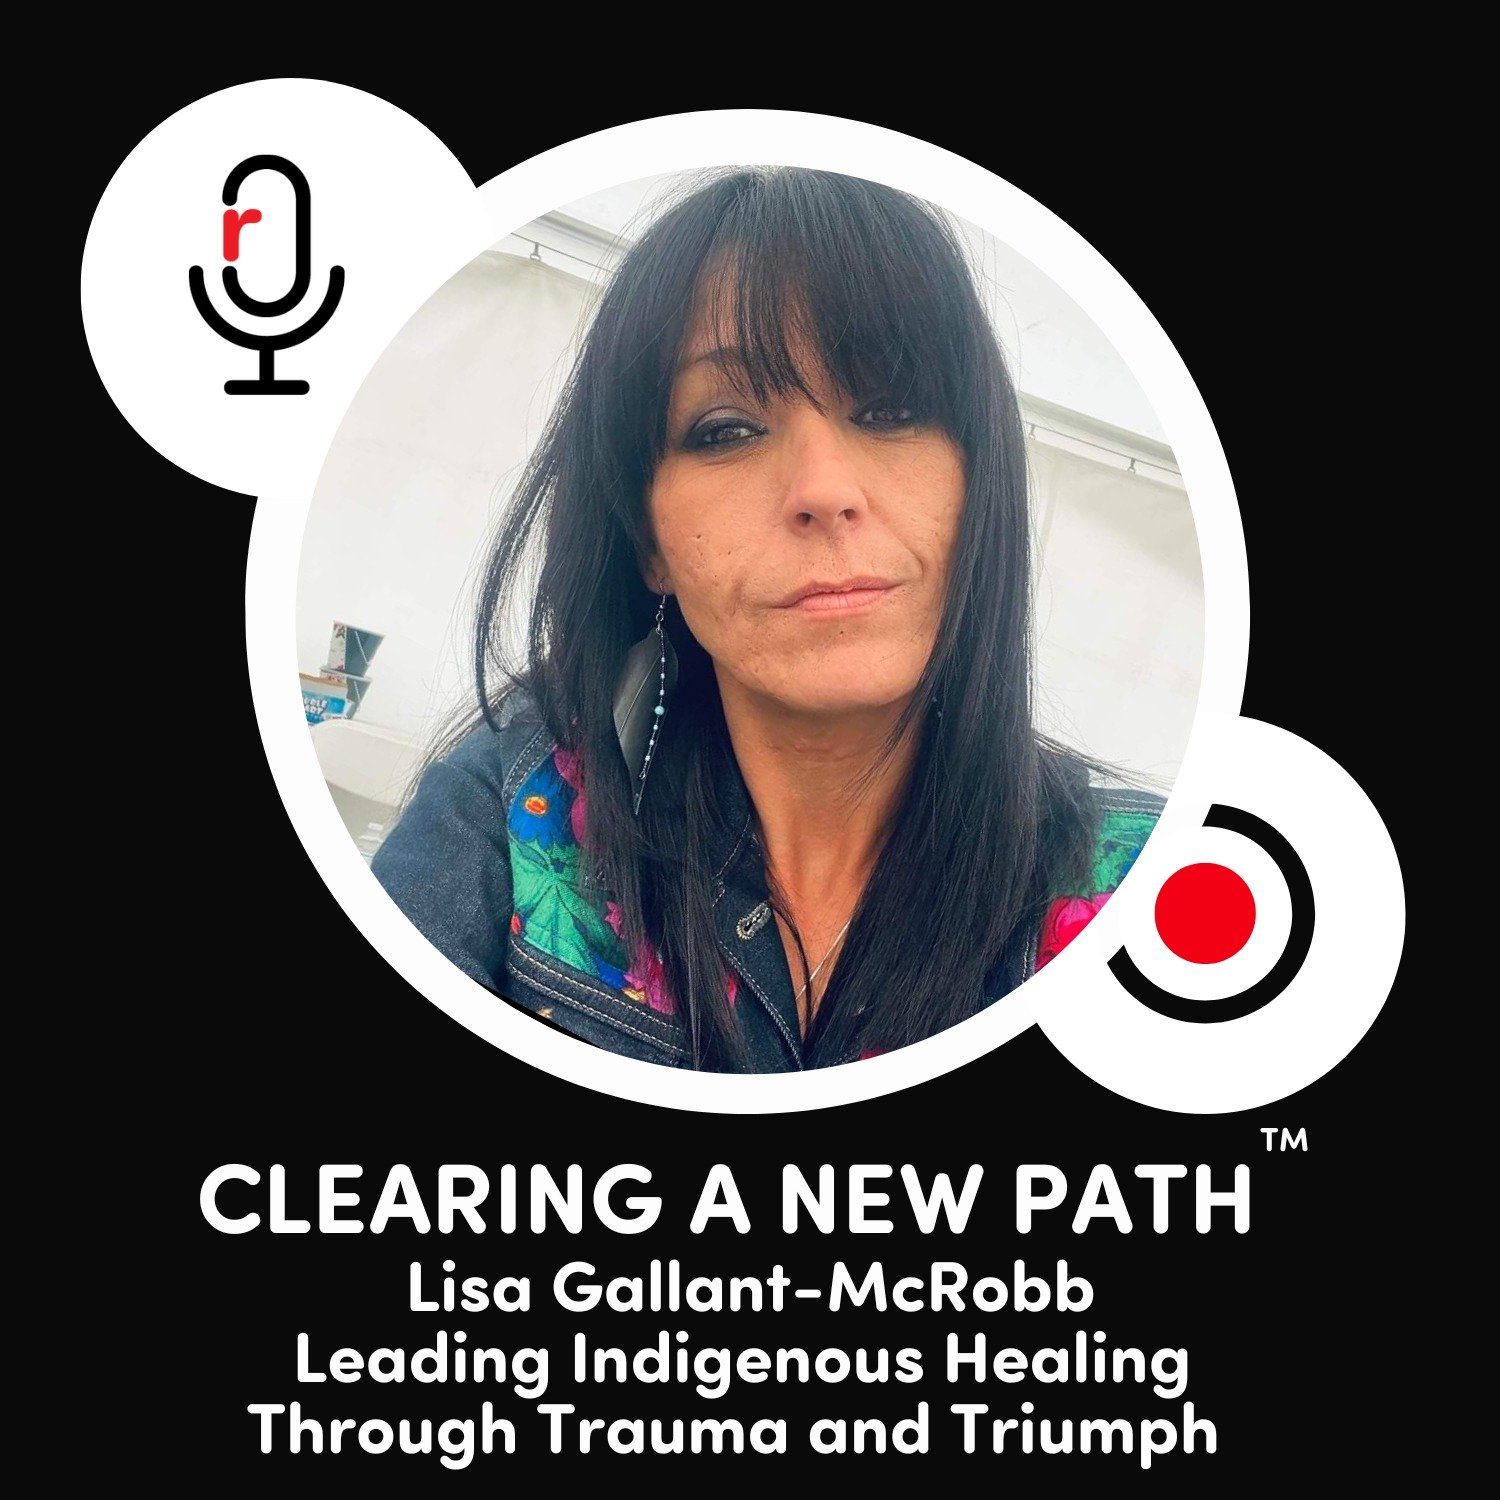 Lisa Gallant-McRobb - Leading Indigenous Healing Through Trauma and Triumph